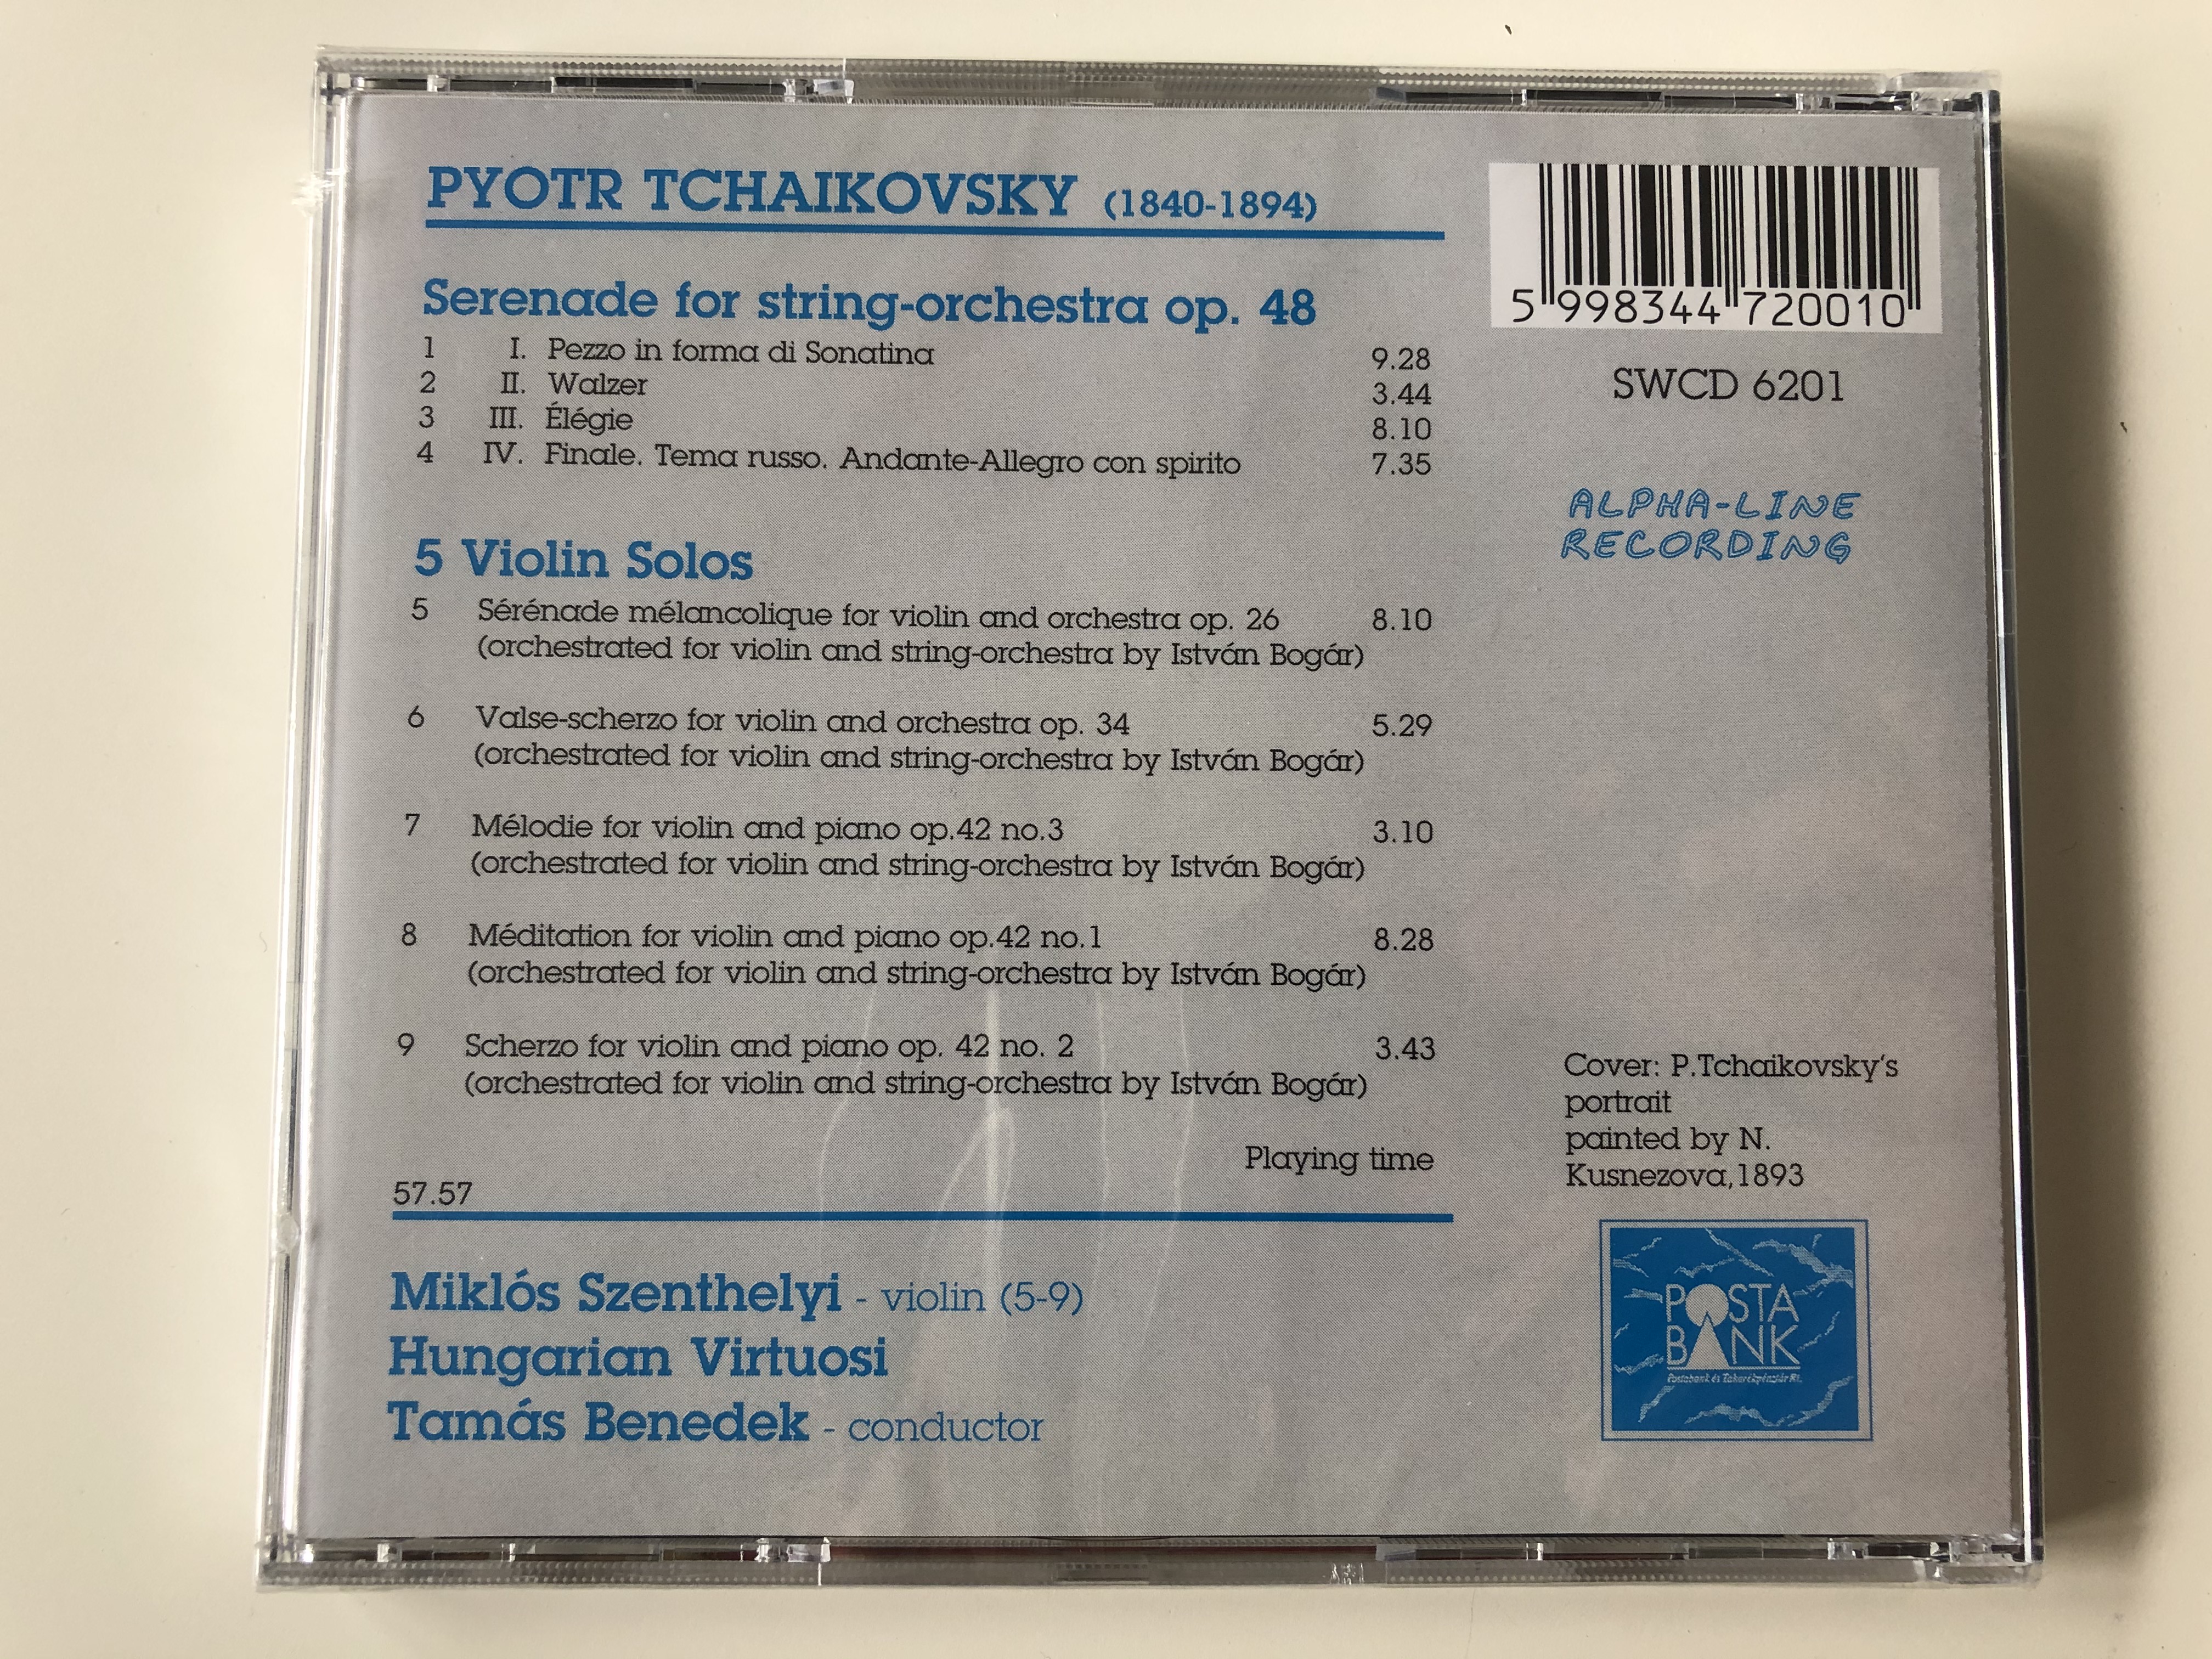 p.-tchaikovsky-serenade-for-strings-5-violin-solos-hungarian-virtuosi-miklos-szenthelyi-violin-conductor-tamas-benedek-alpha-line-recording-audio-cd-swcd-6201-2-.jpg